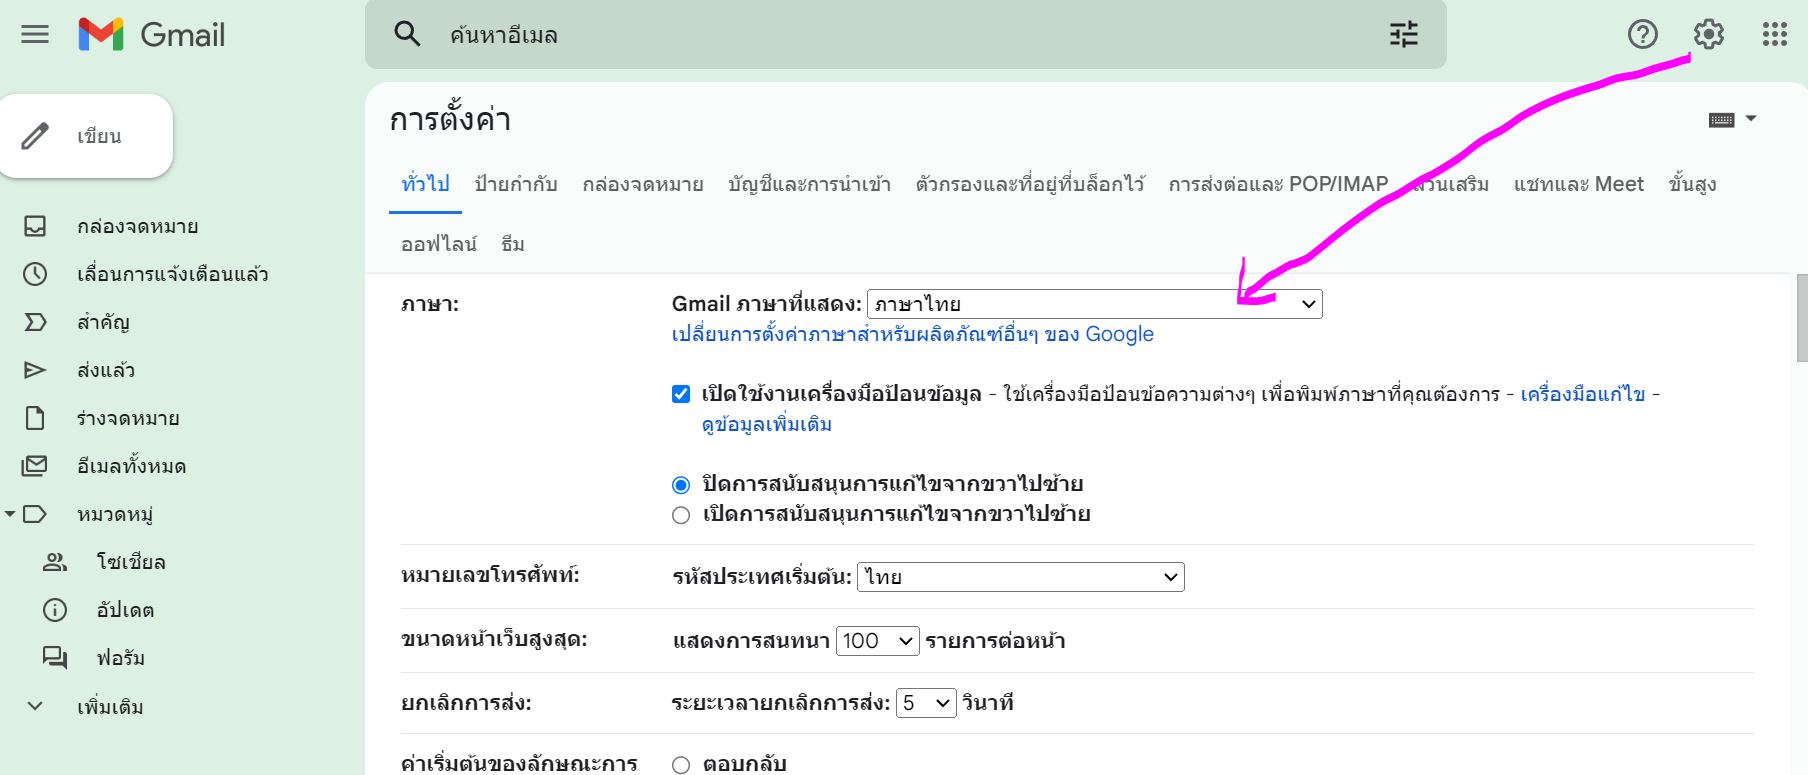 Gmail ถูกย้ายประเทศที่ตั้งจากไทยเป็นไต้หวัน - Pantip